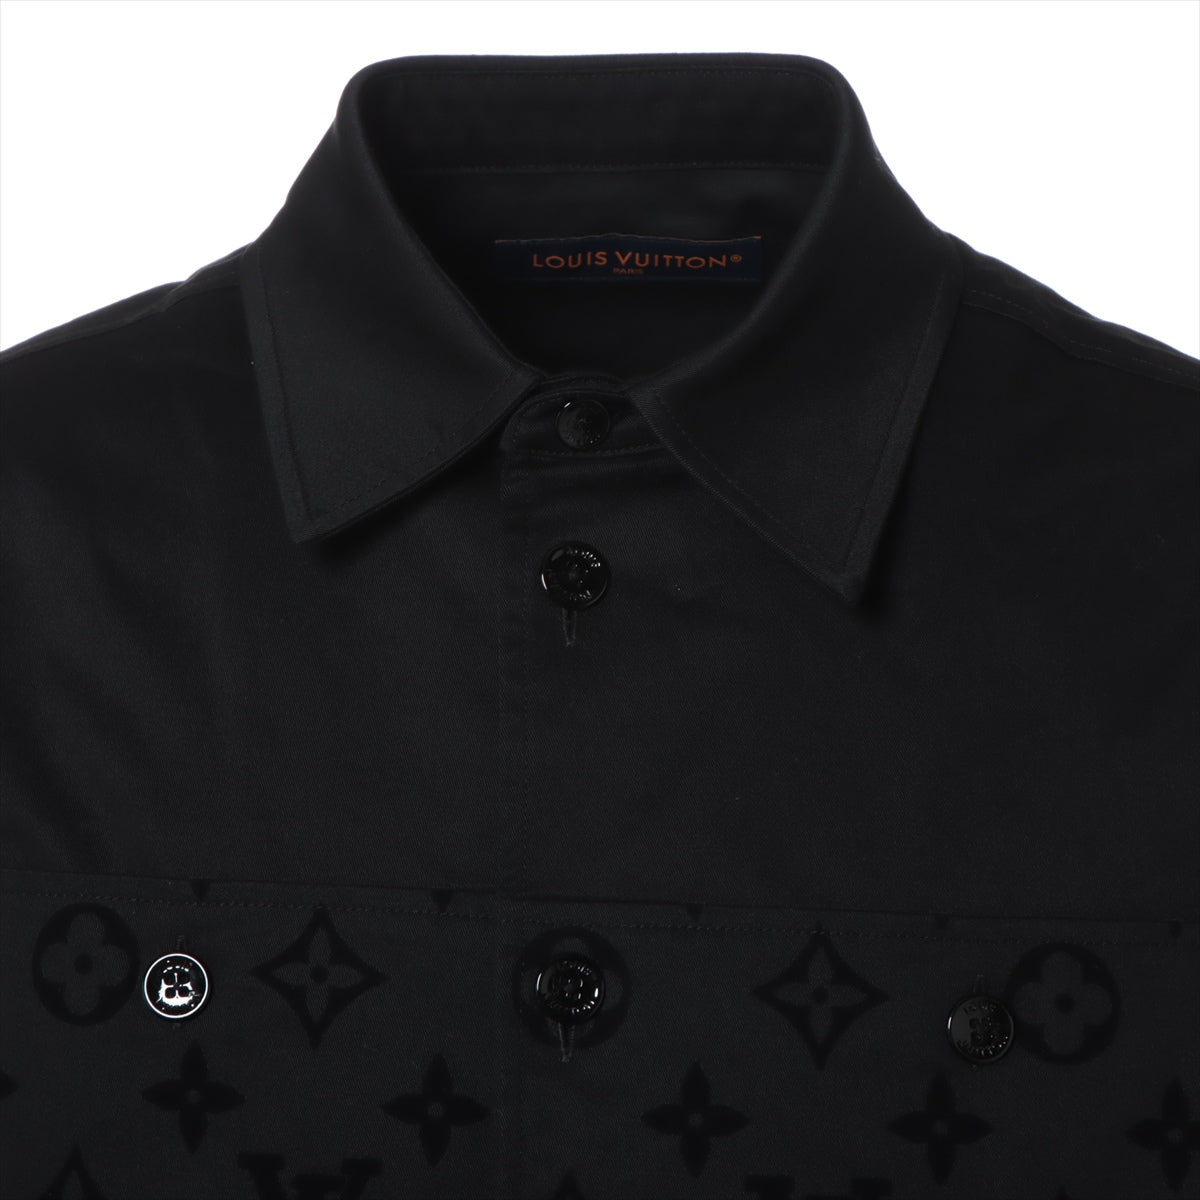 Louis Vuitton 24SS Cotton Shirt S Men's Black  RM241MQ flocked casual cotton overshirt Monogram Has spare buttons